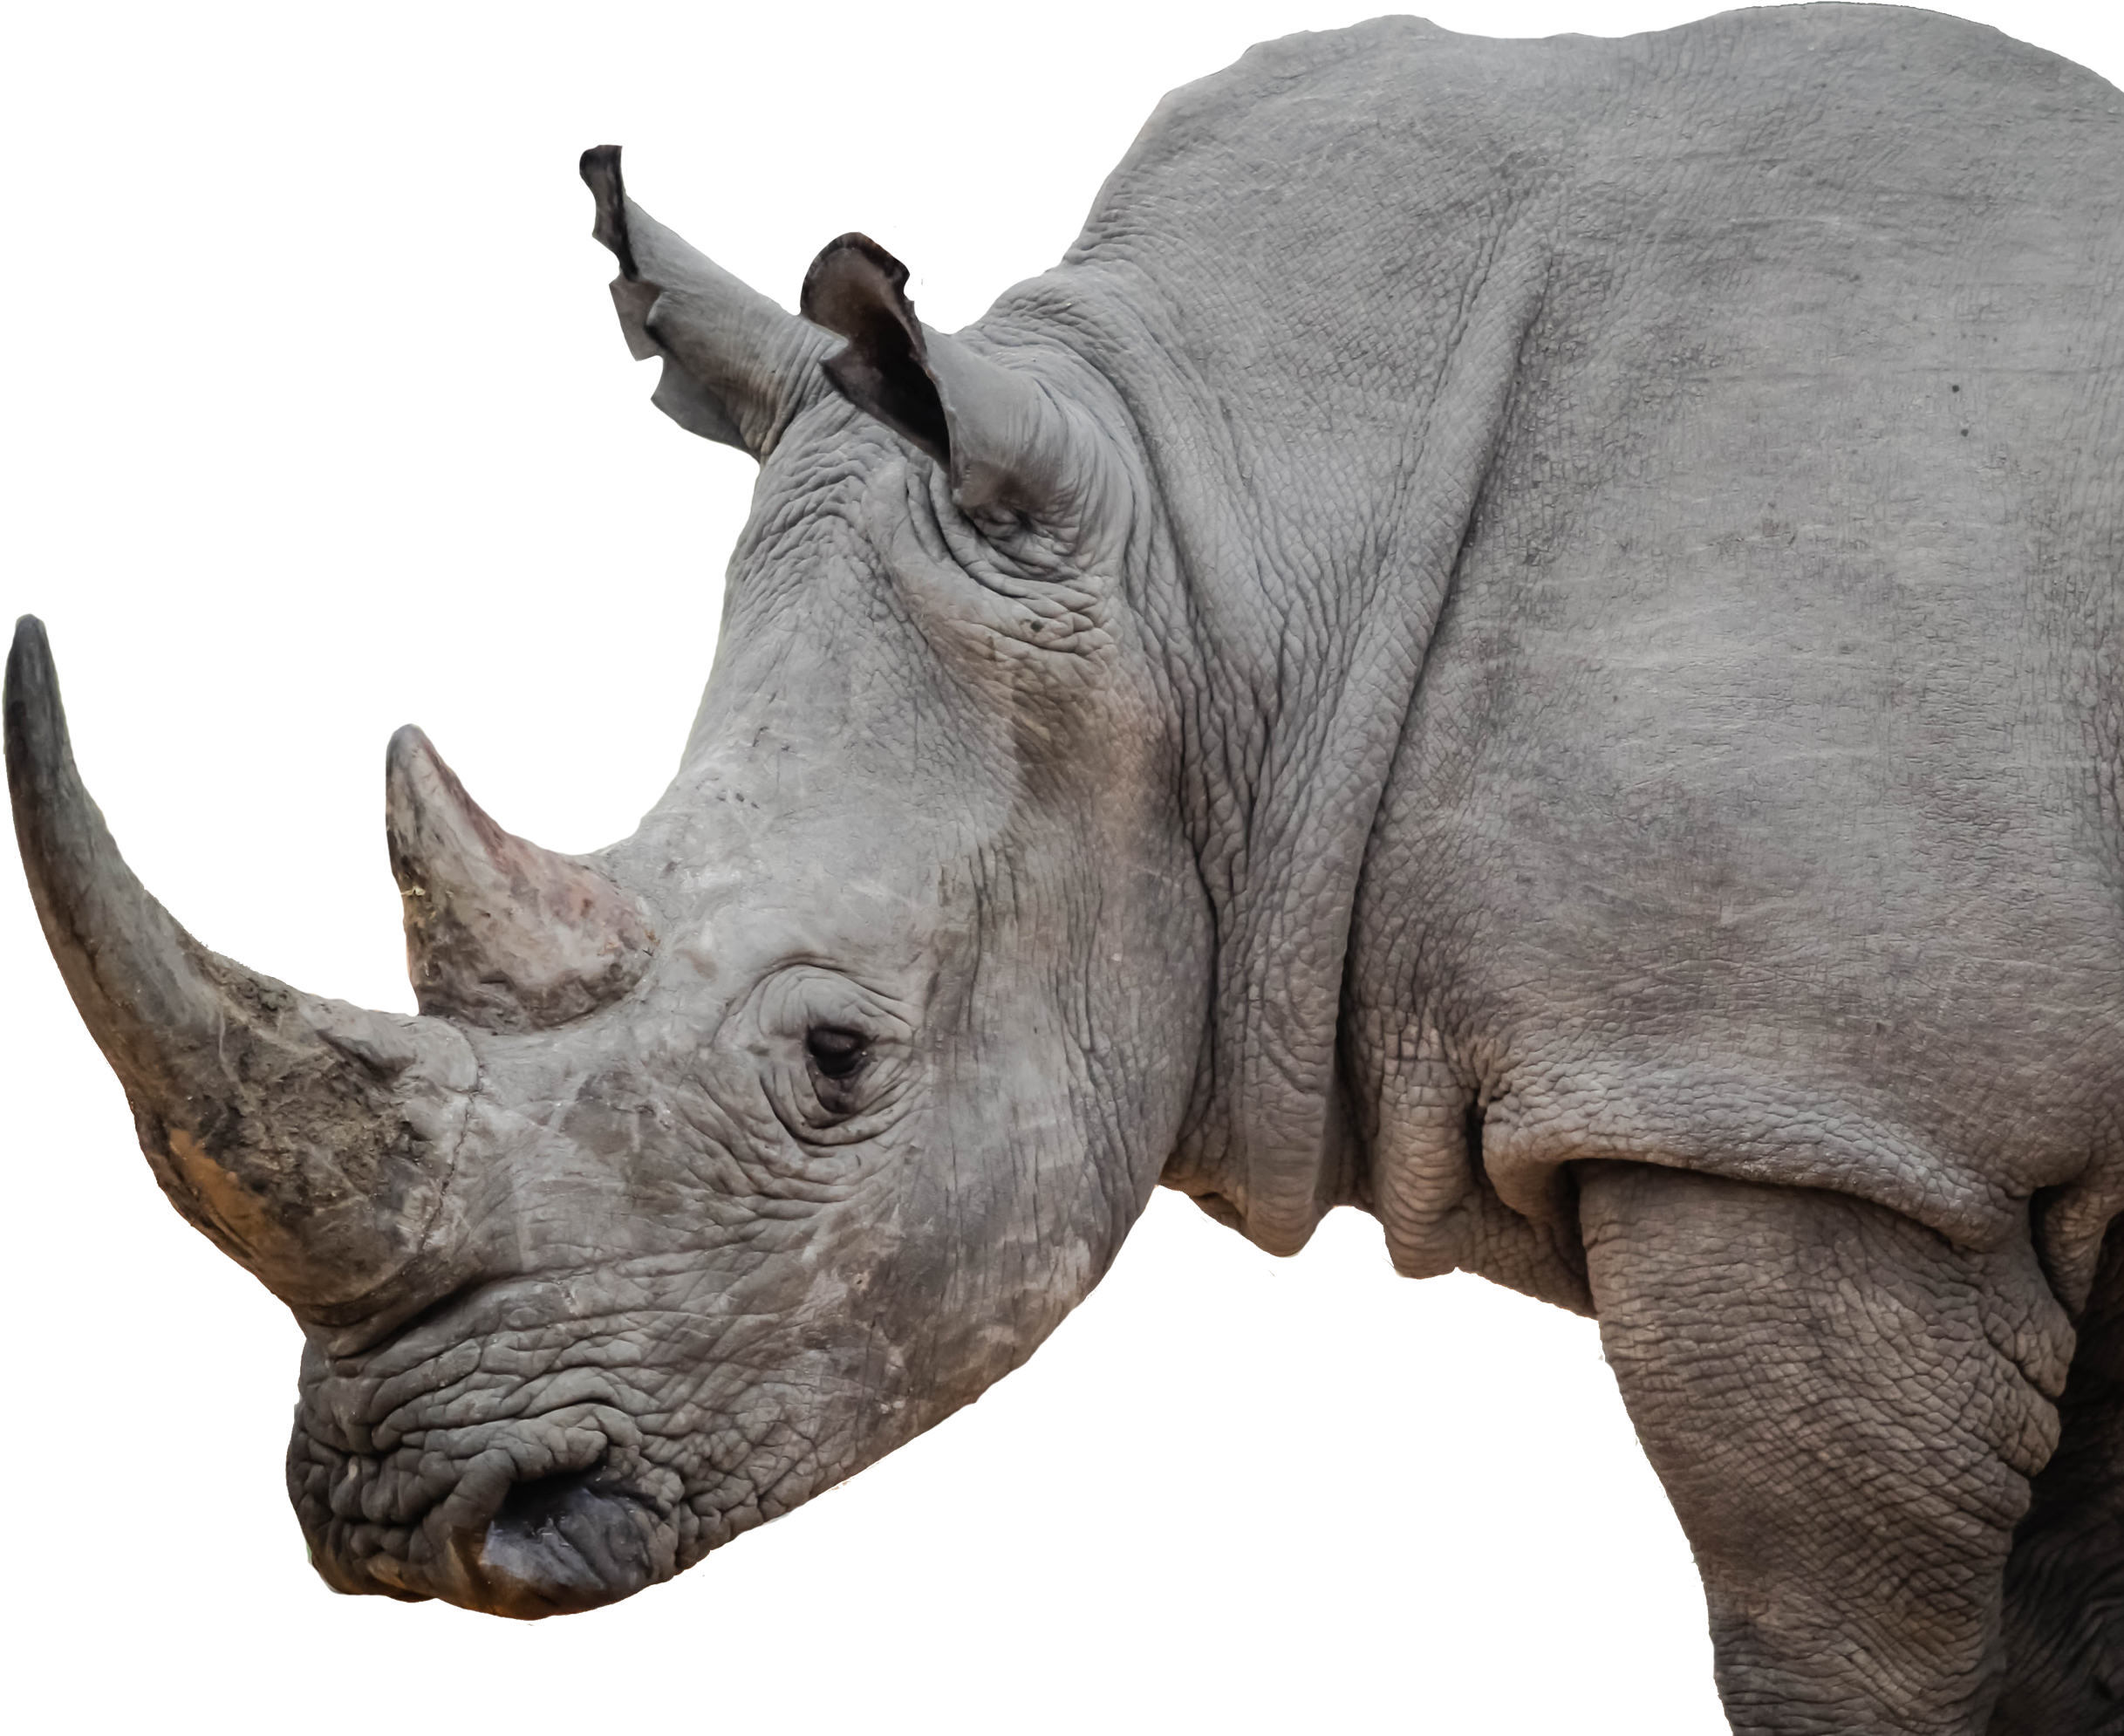 A Rhinoceros With A Black Background